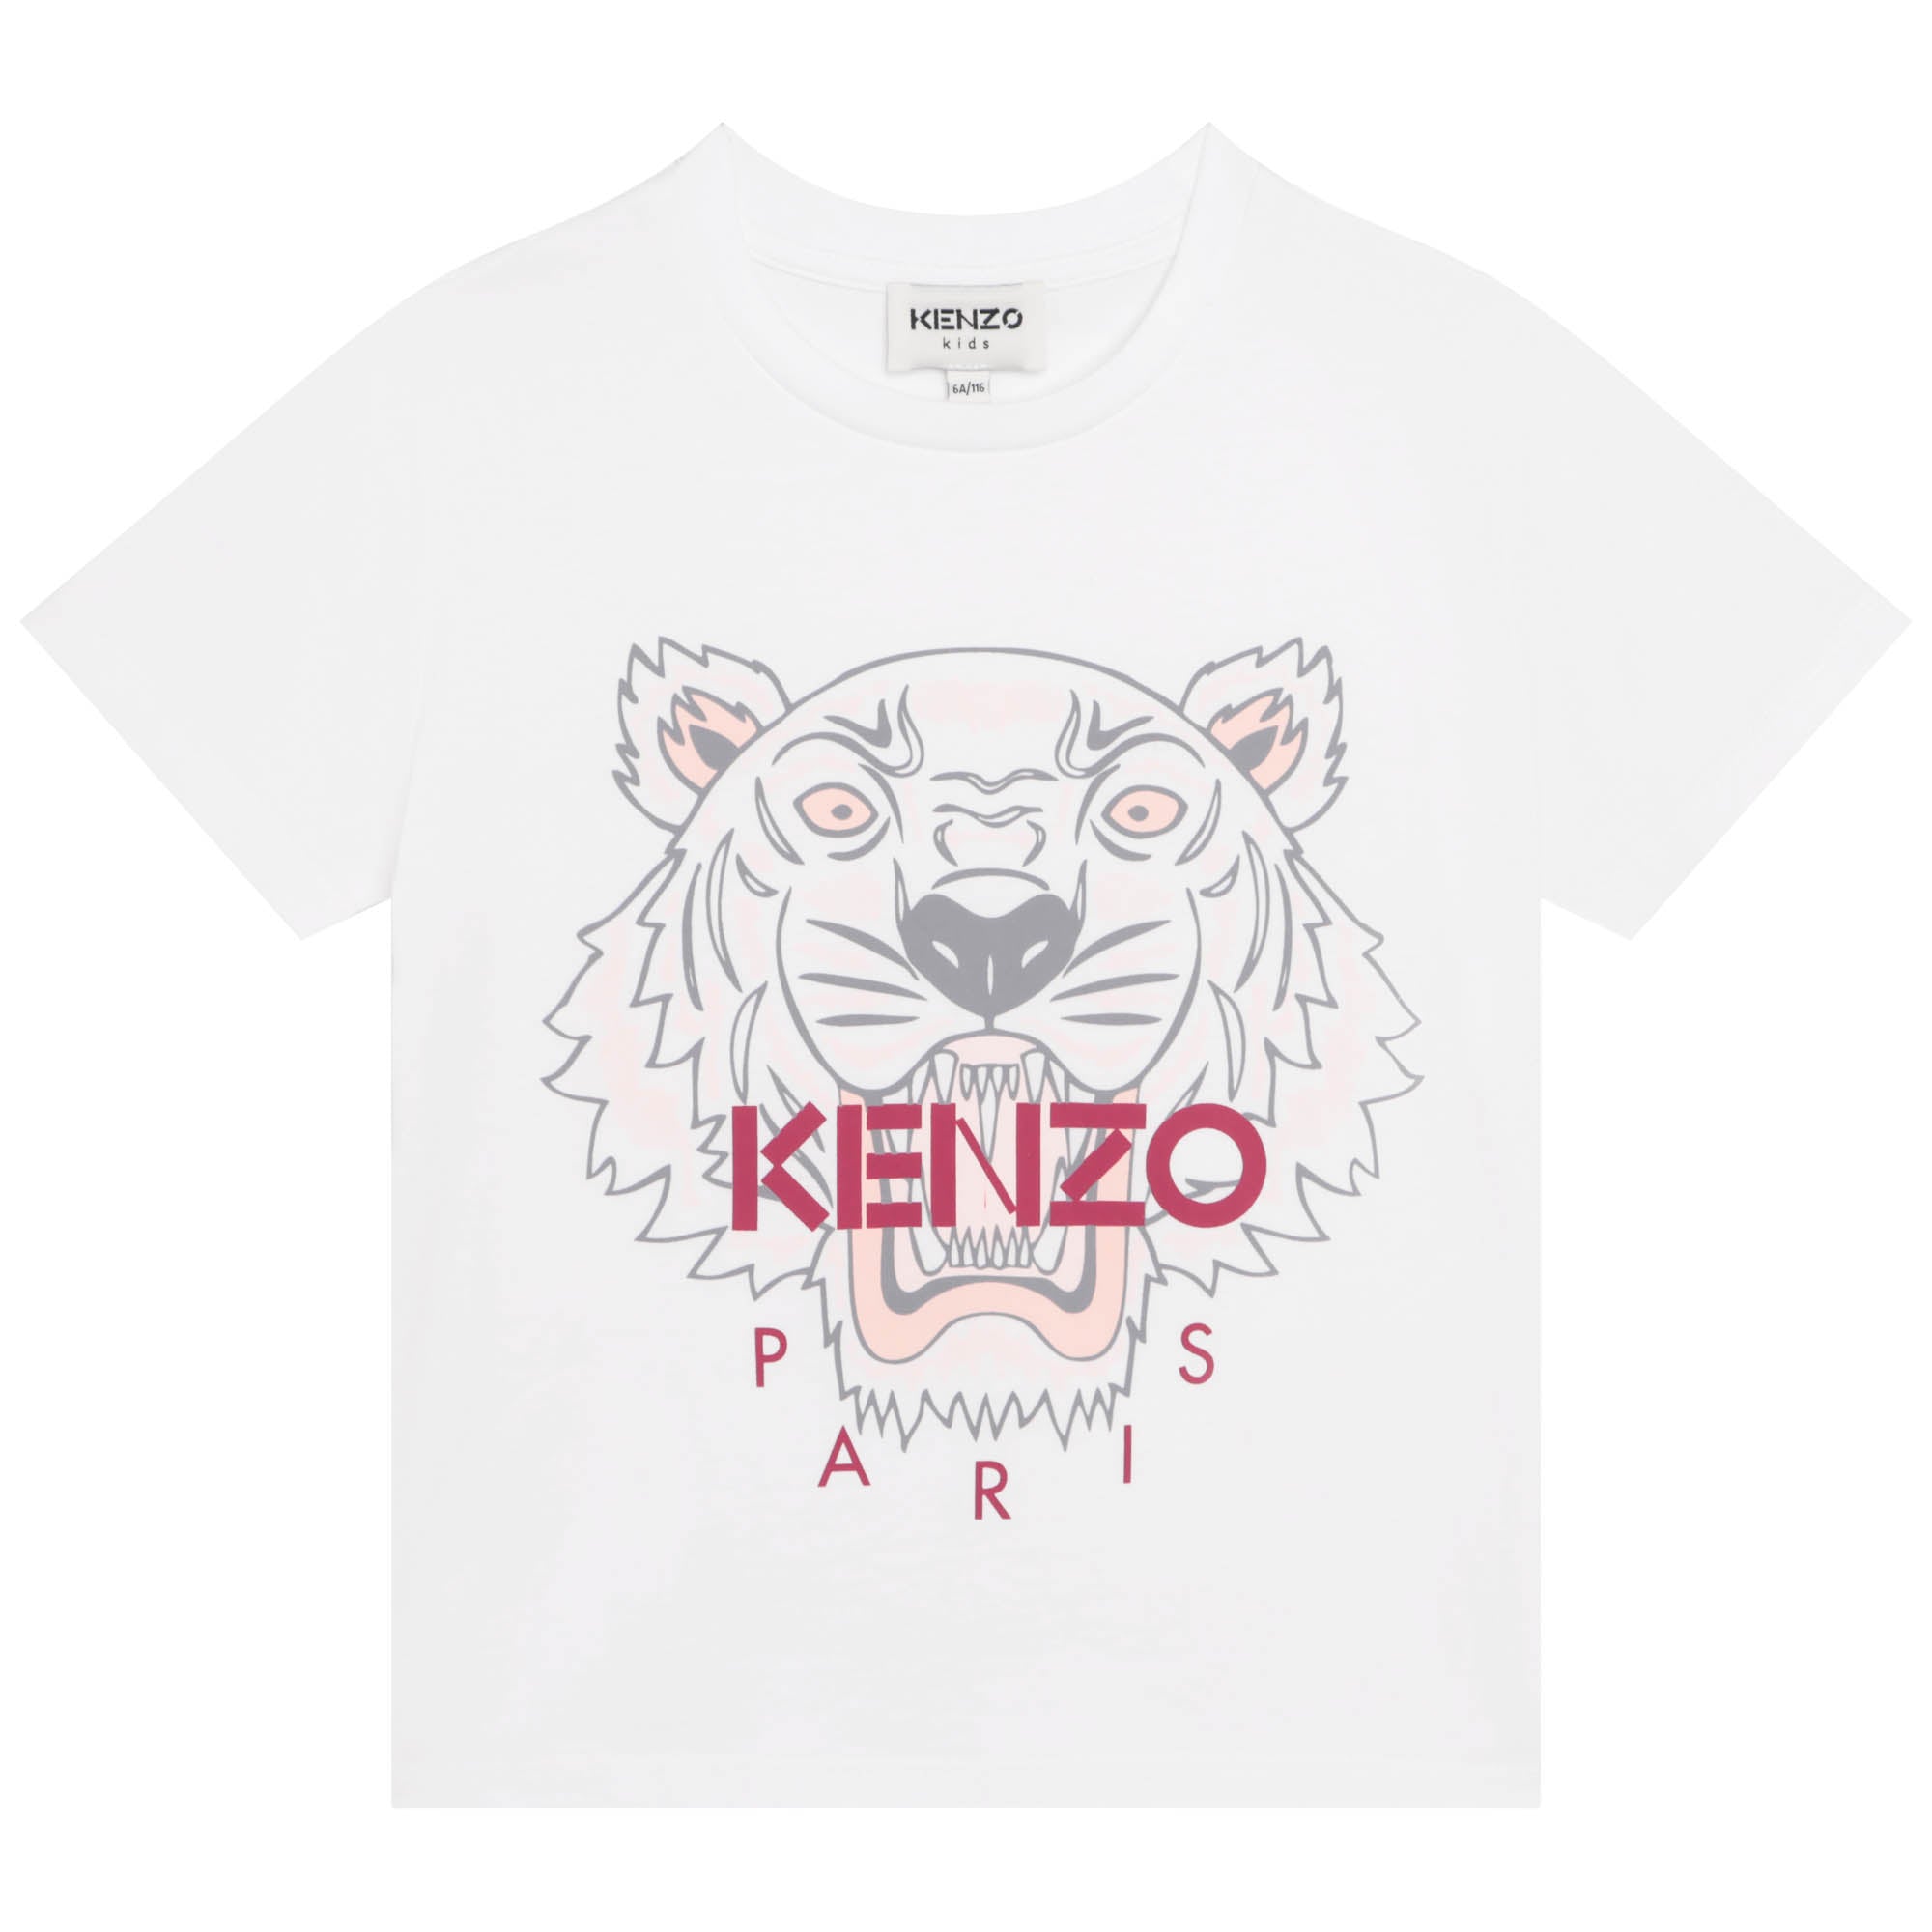 Girls White Tiger Cotton T-Shirt